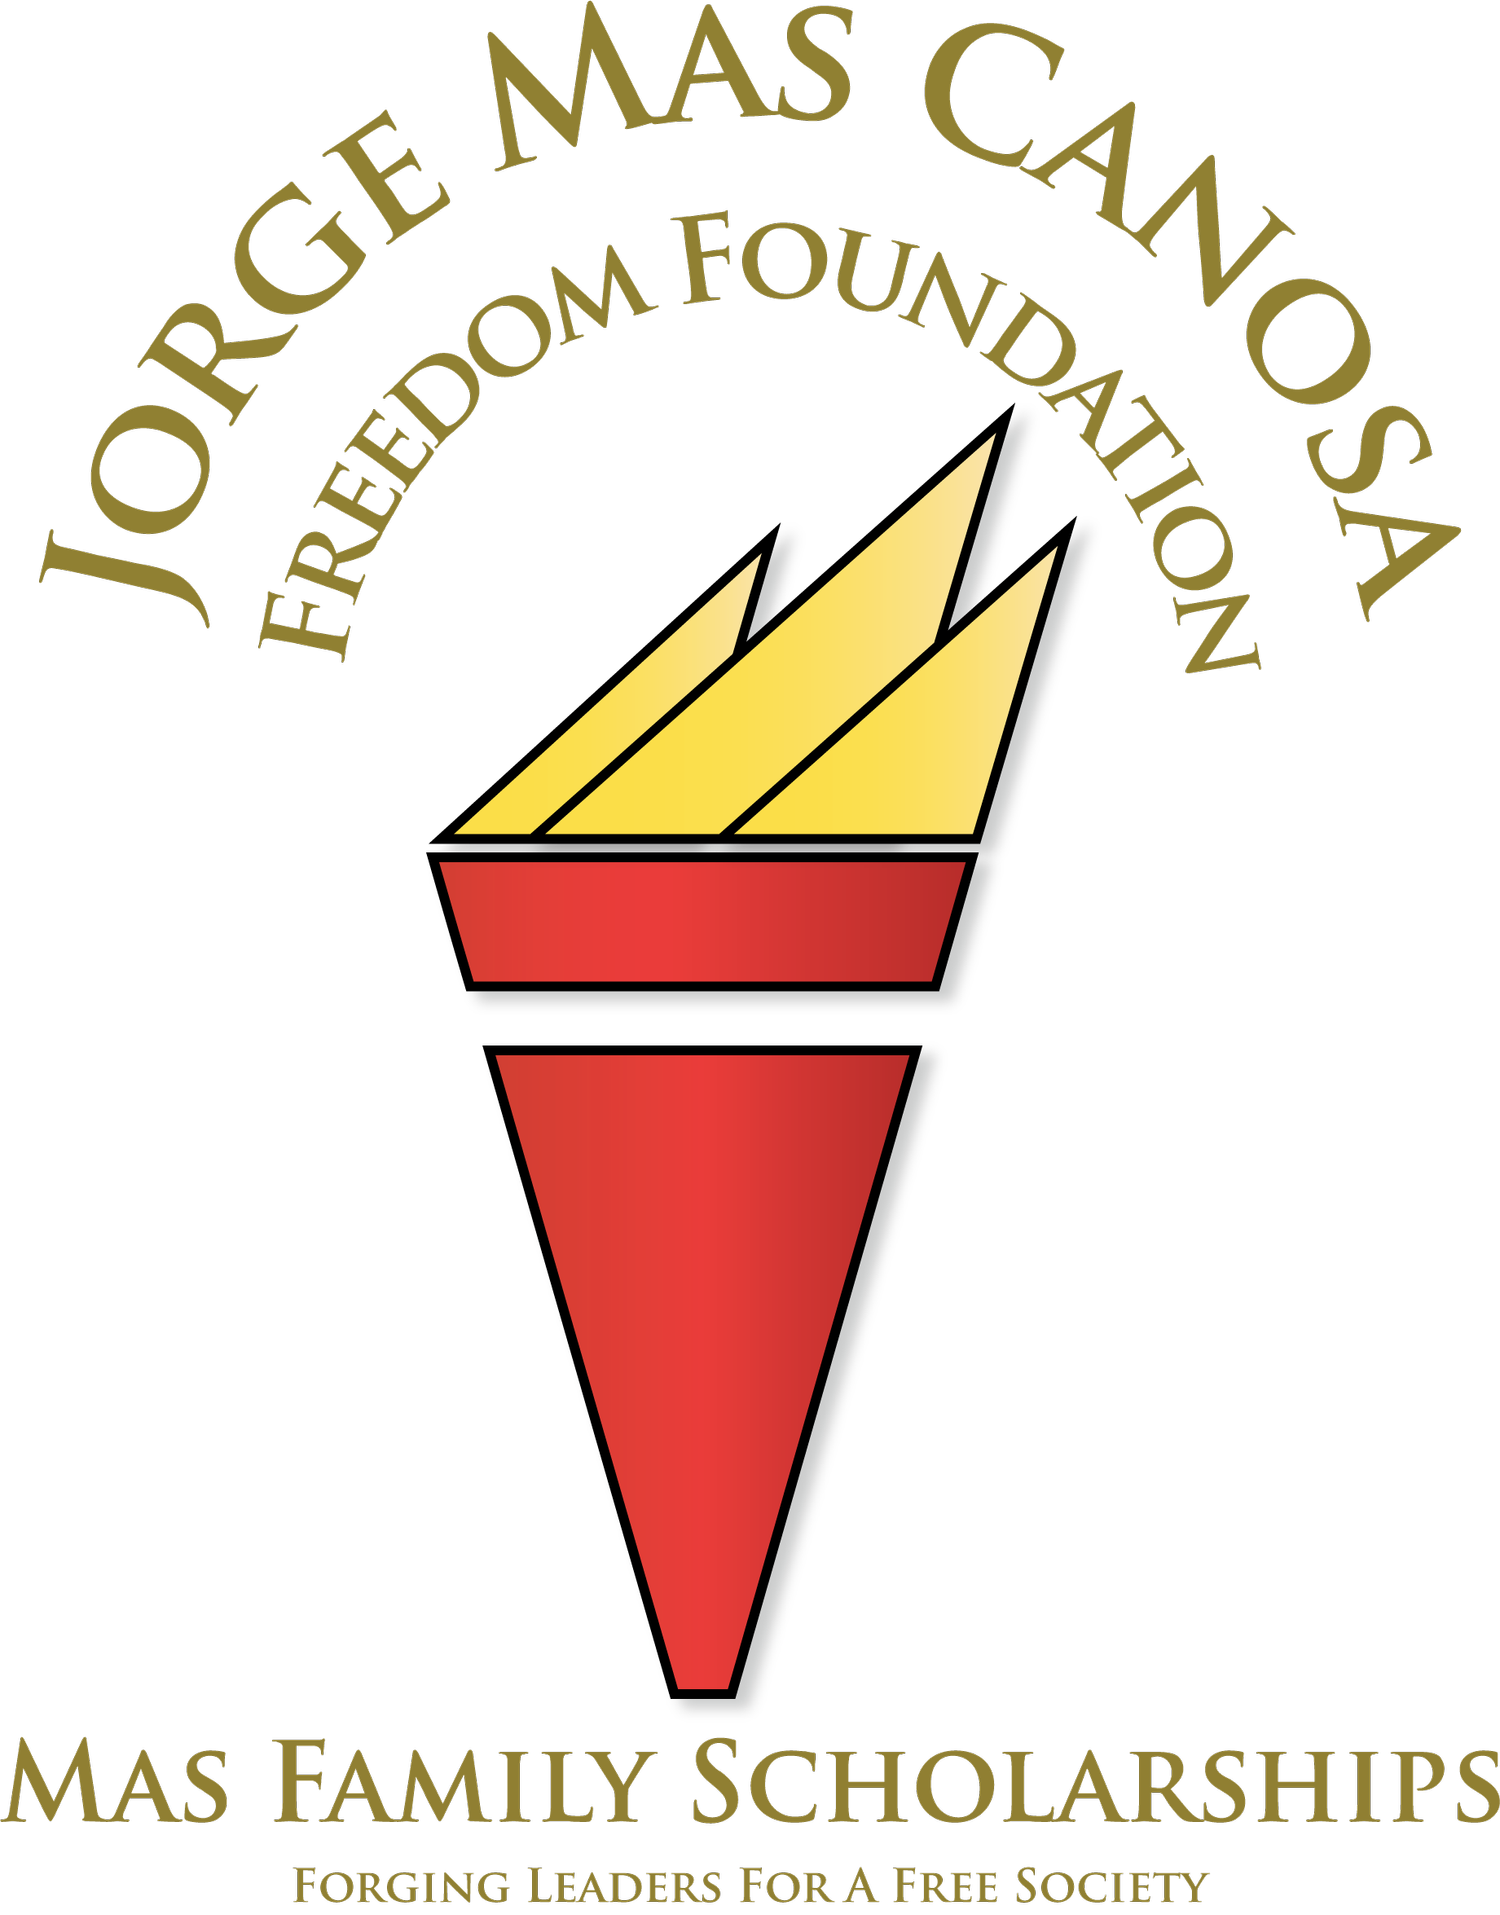 Jorge Mas Canosa Freedom Foundation